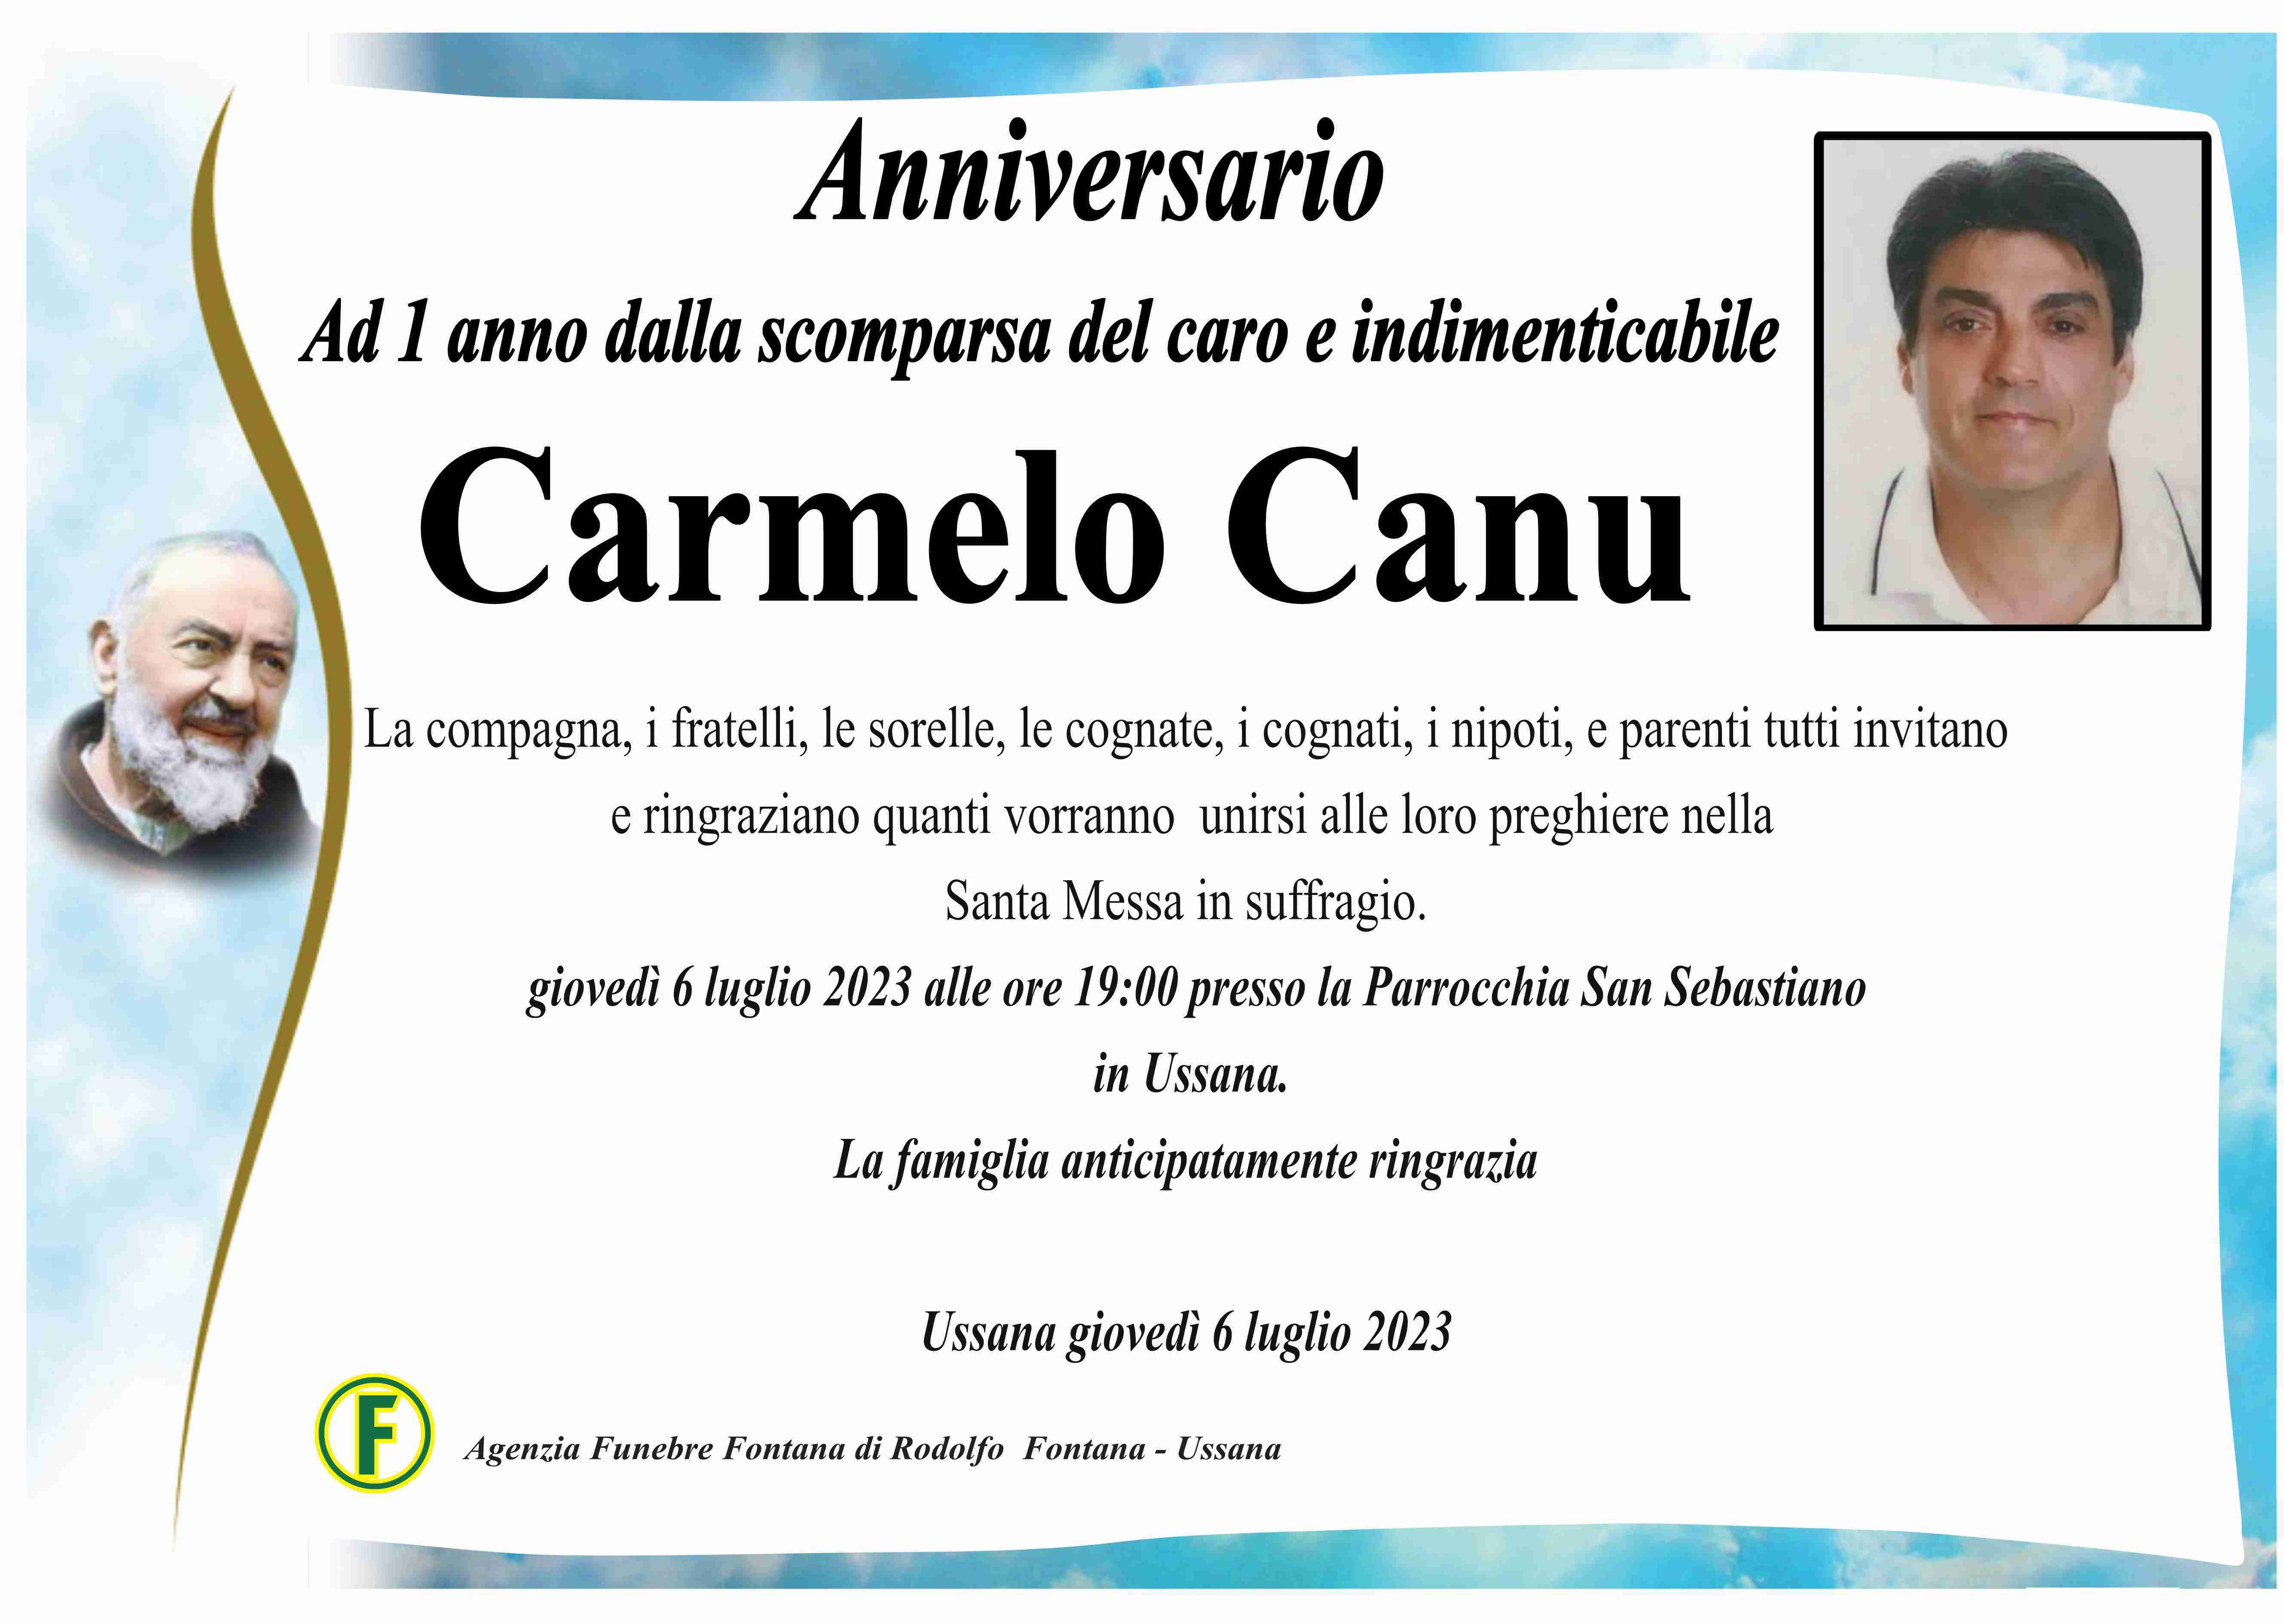 Carmelo Canu